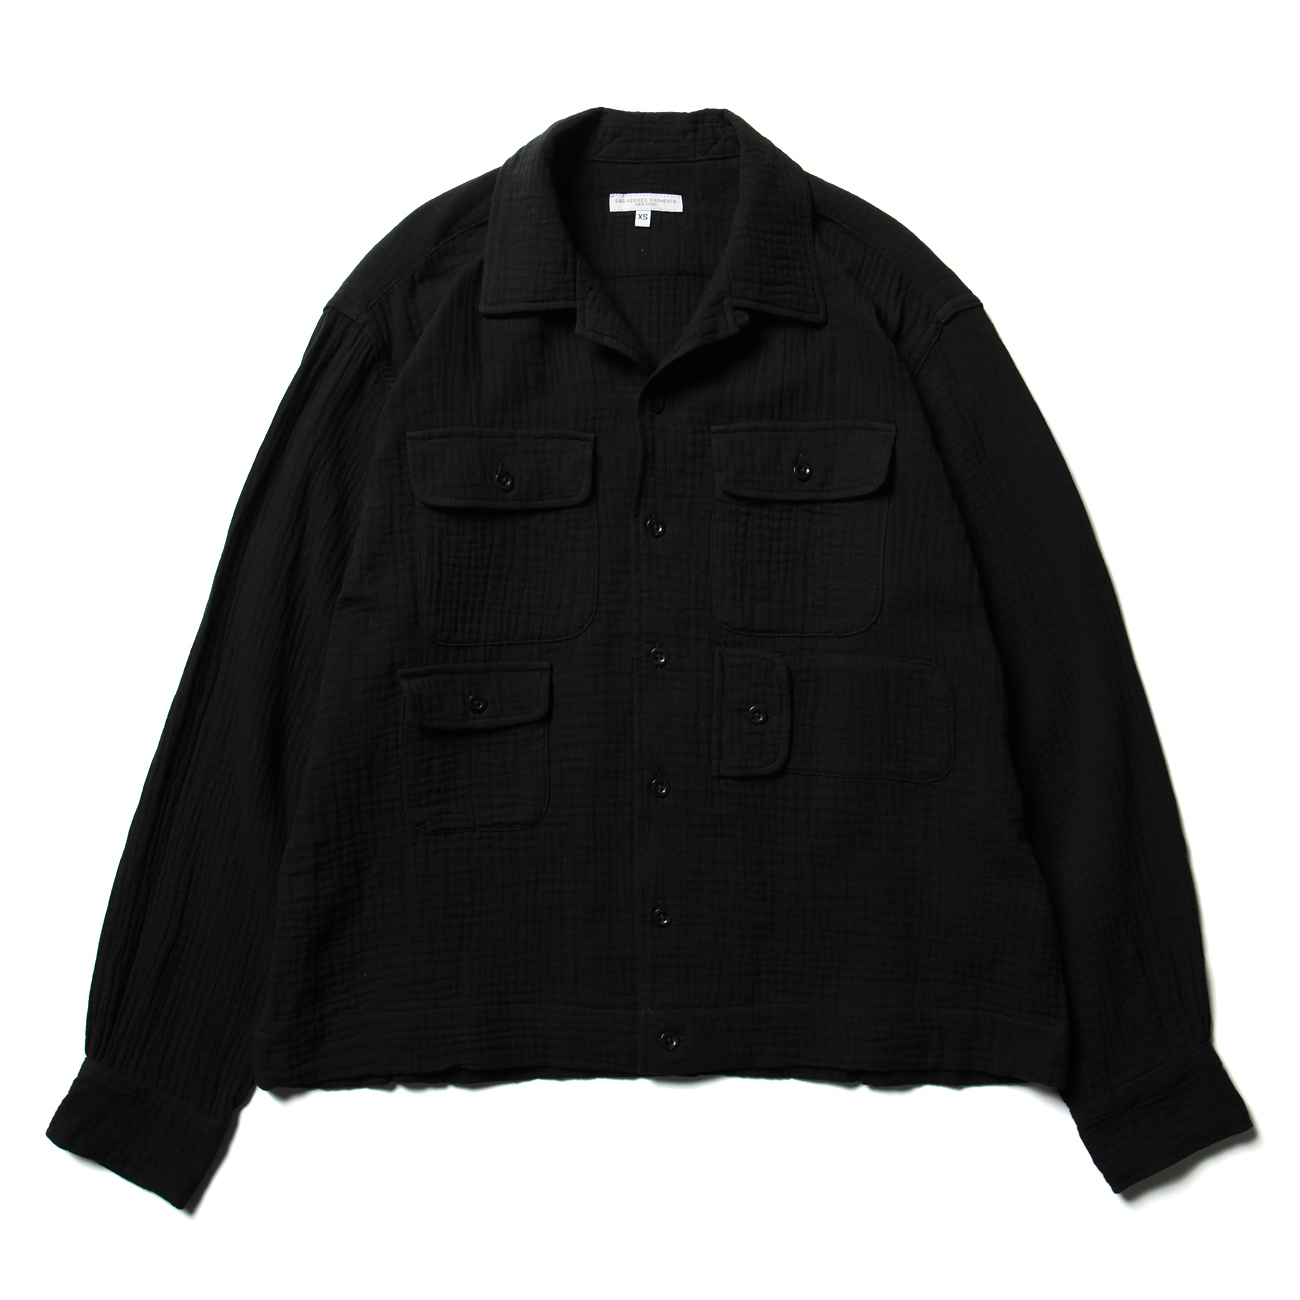 Bowling Shirt - Cotton Crepe - Black